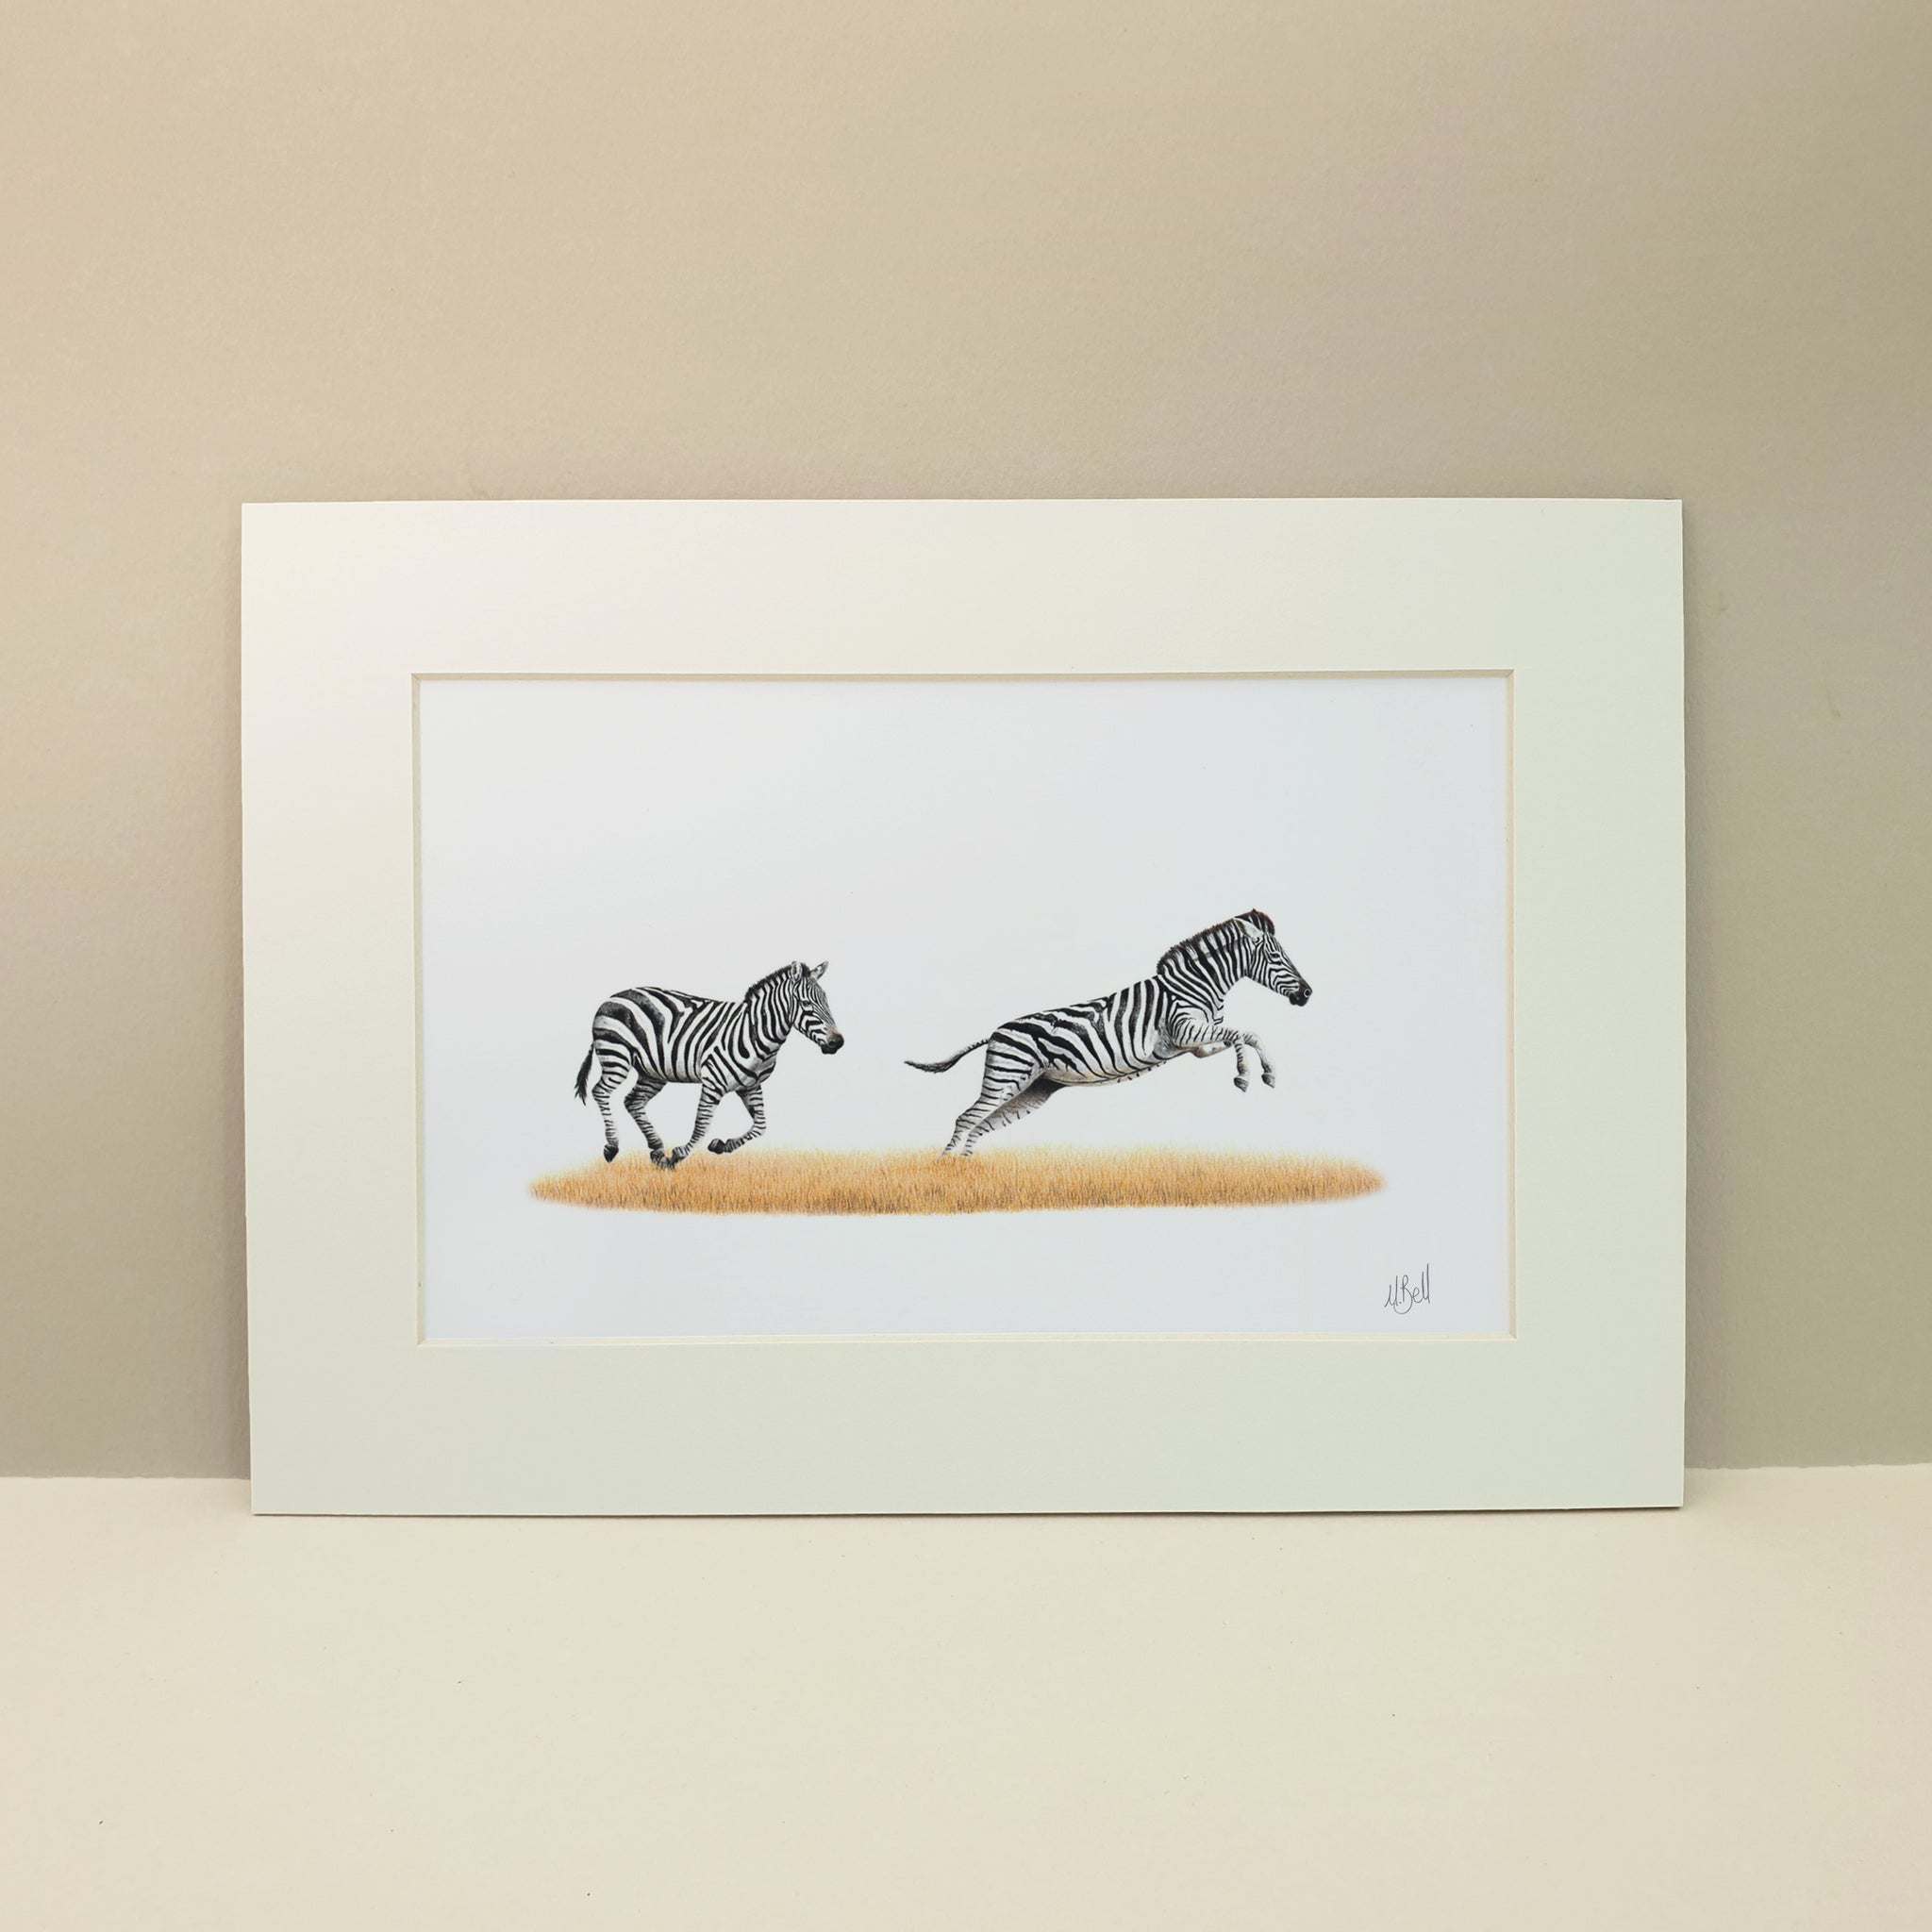 Running zebras pencil artwork by Matthew Bell wildlife artist